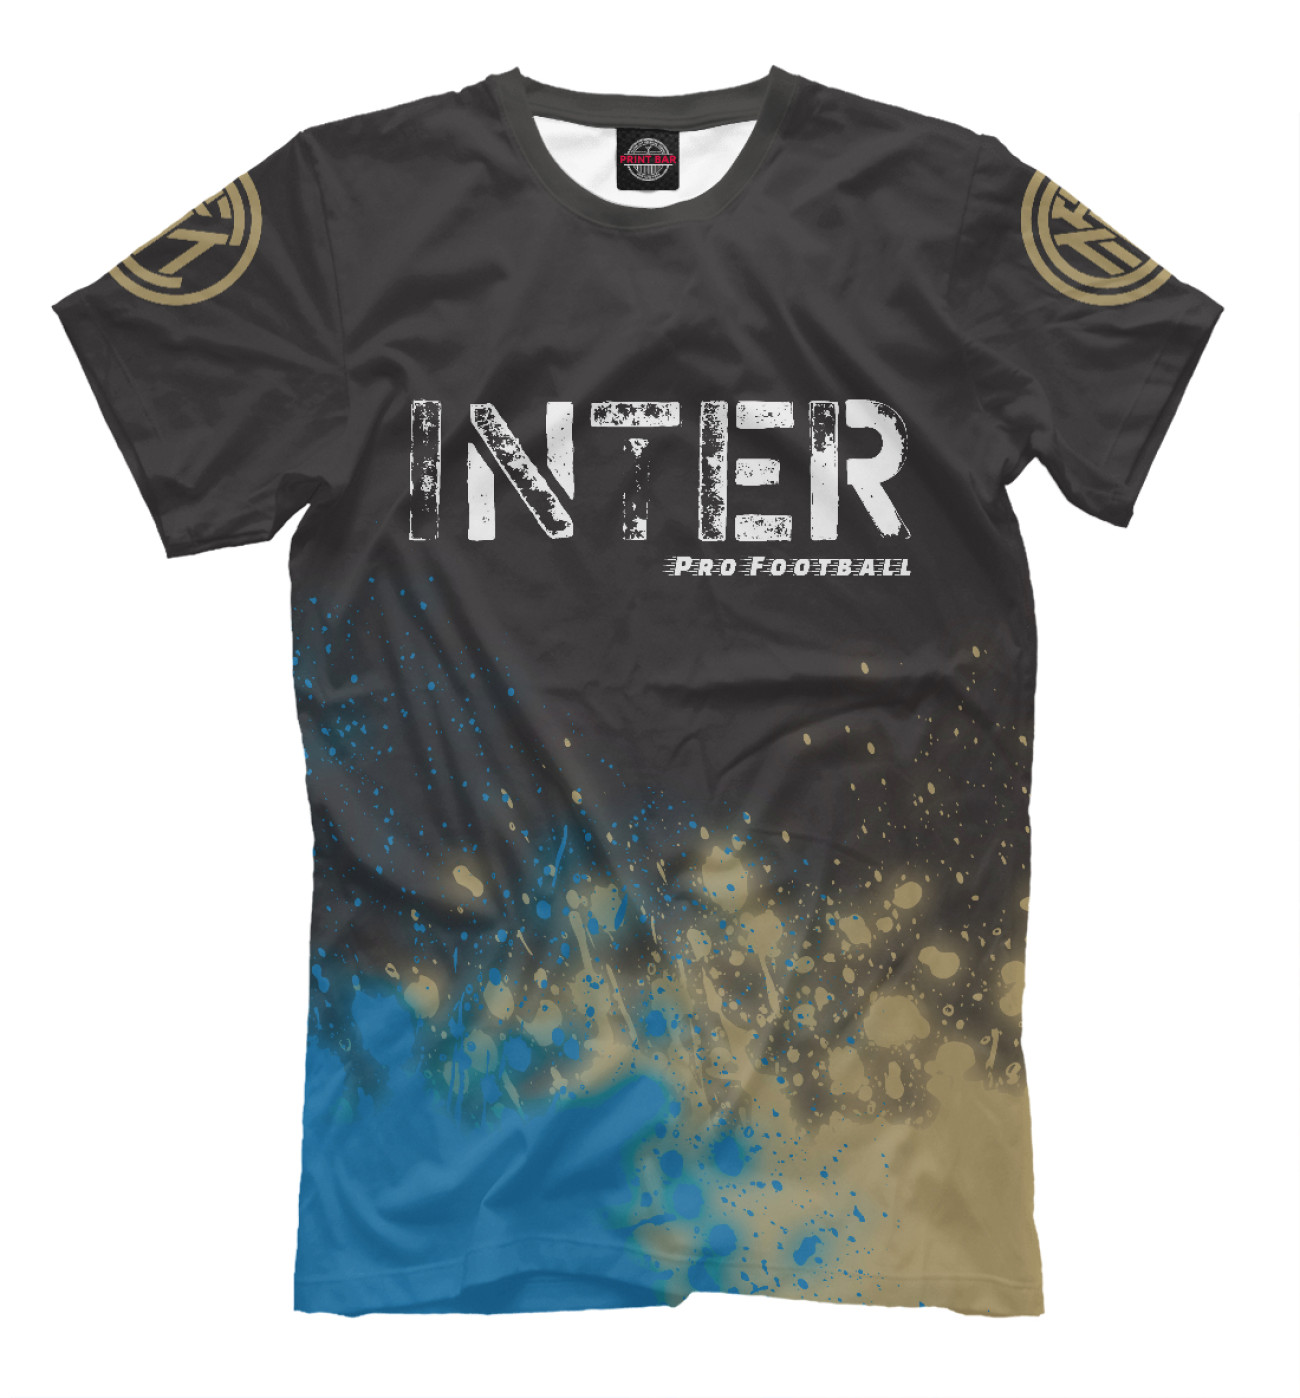 Мужская Футболка Интер | Inter Pro Football, артикул: ITR-903351-fut-2